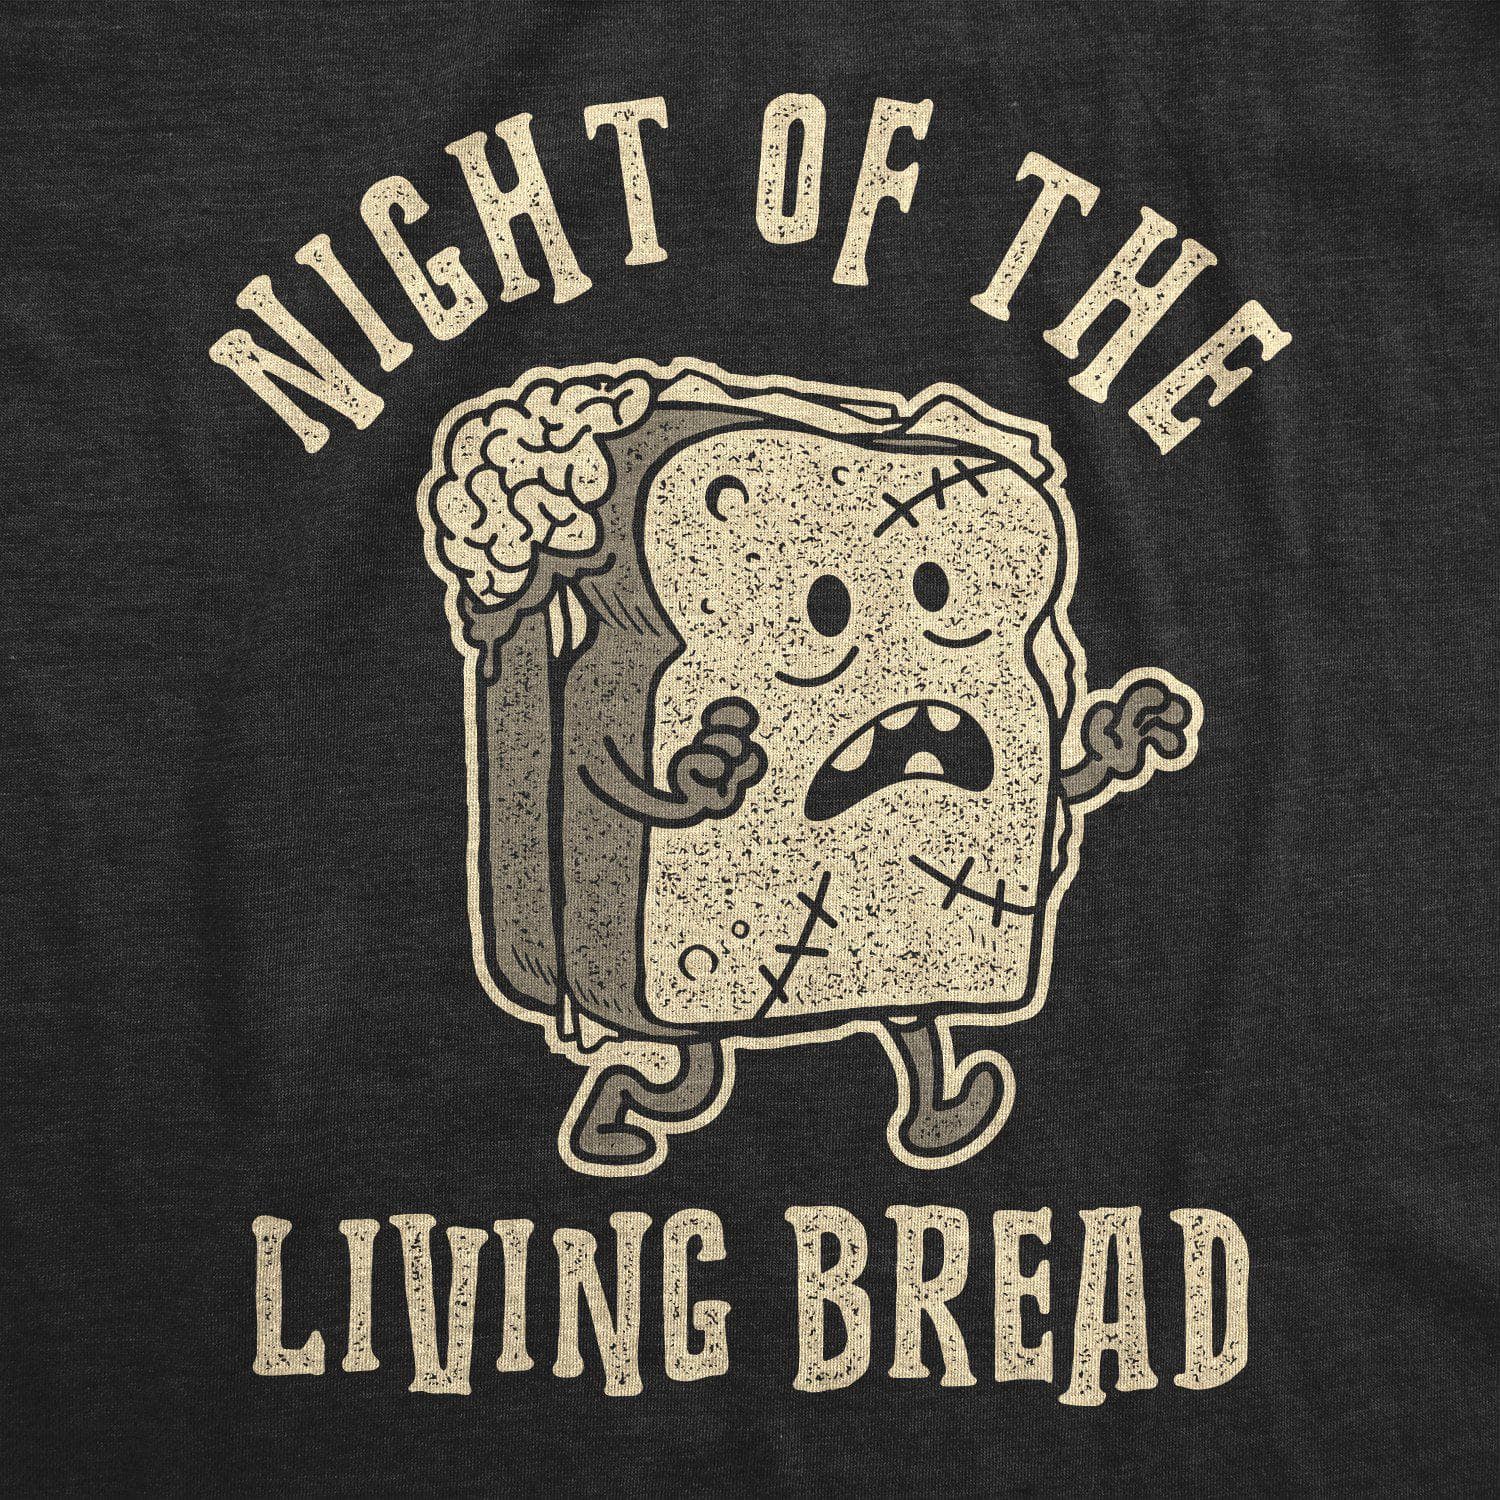 Night Of The Living Bread Men's Tshirt - Crazy Dog T-Shirts